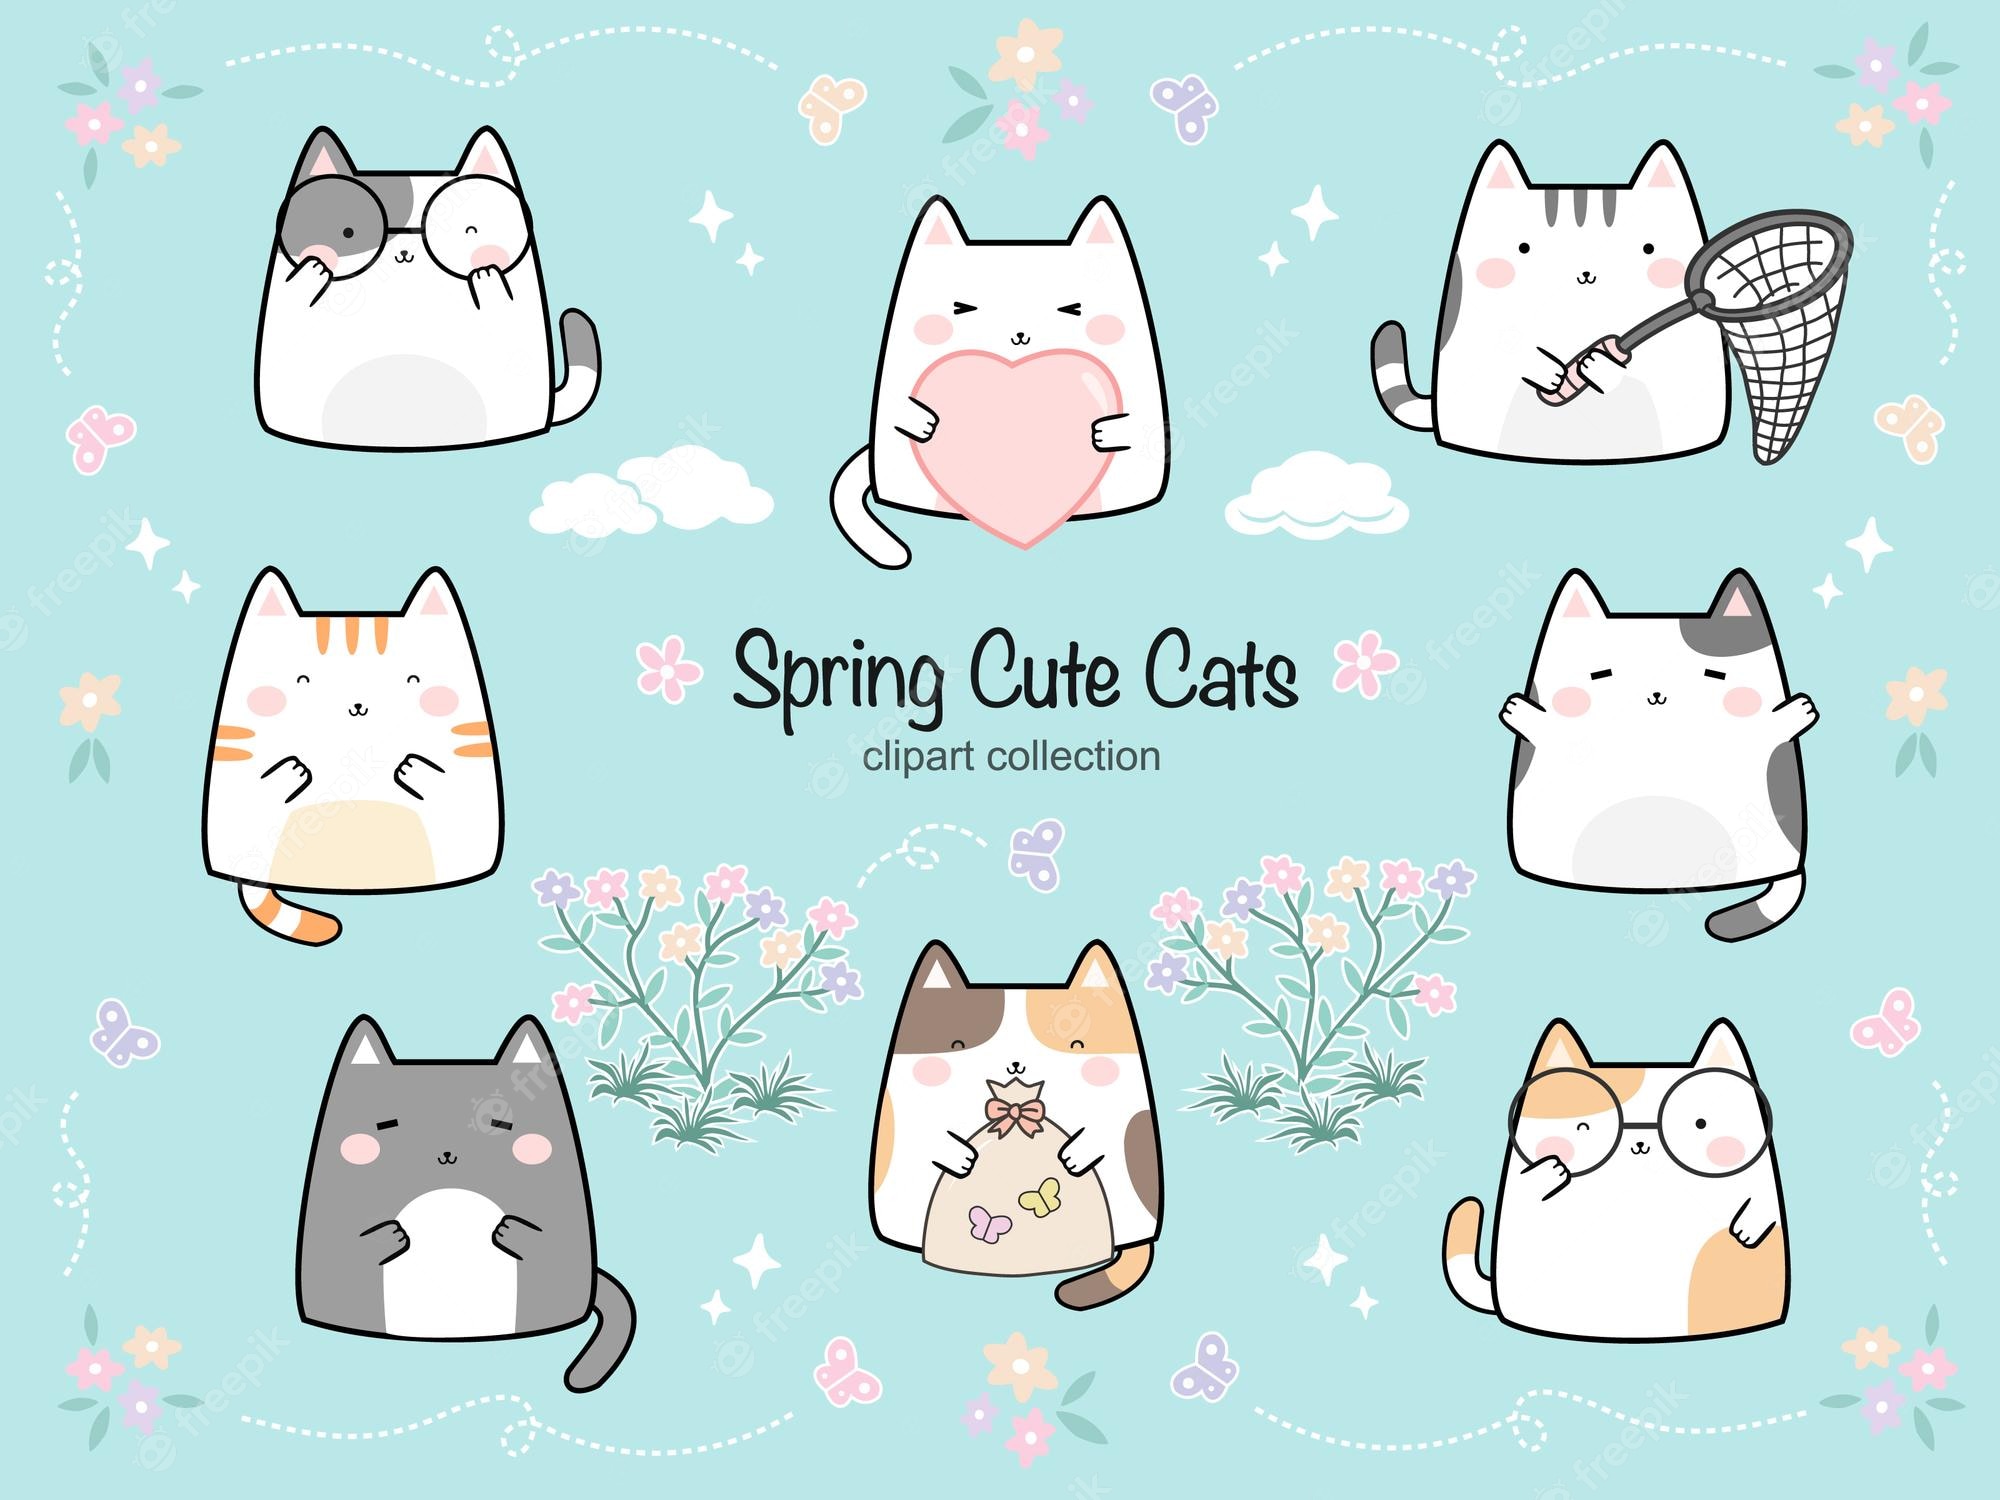 Cat Clipart, Funny cats, Kawaii kitten, doodle Kitty icons